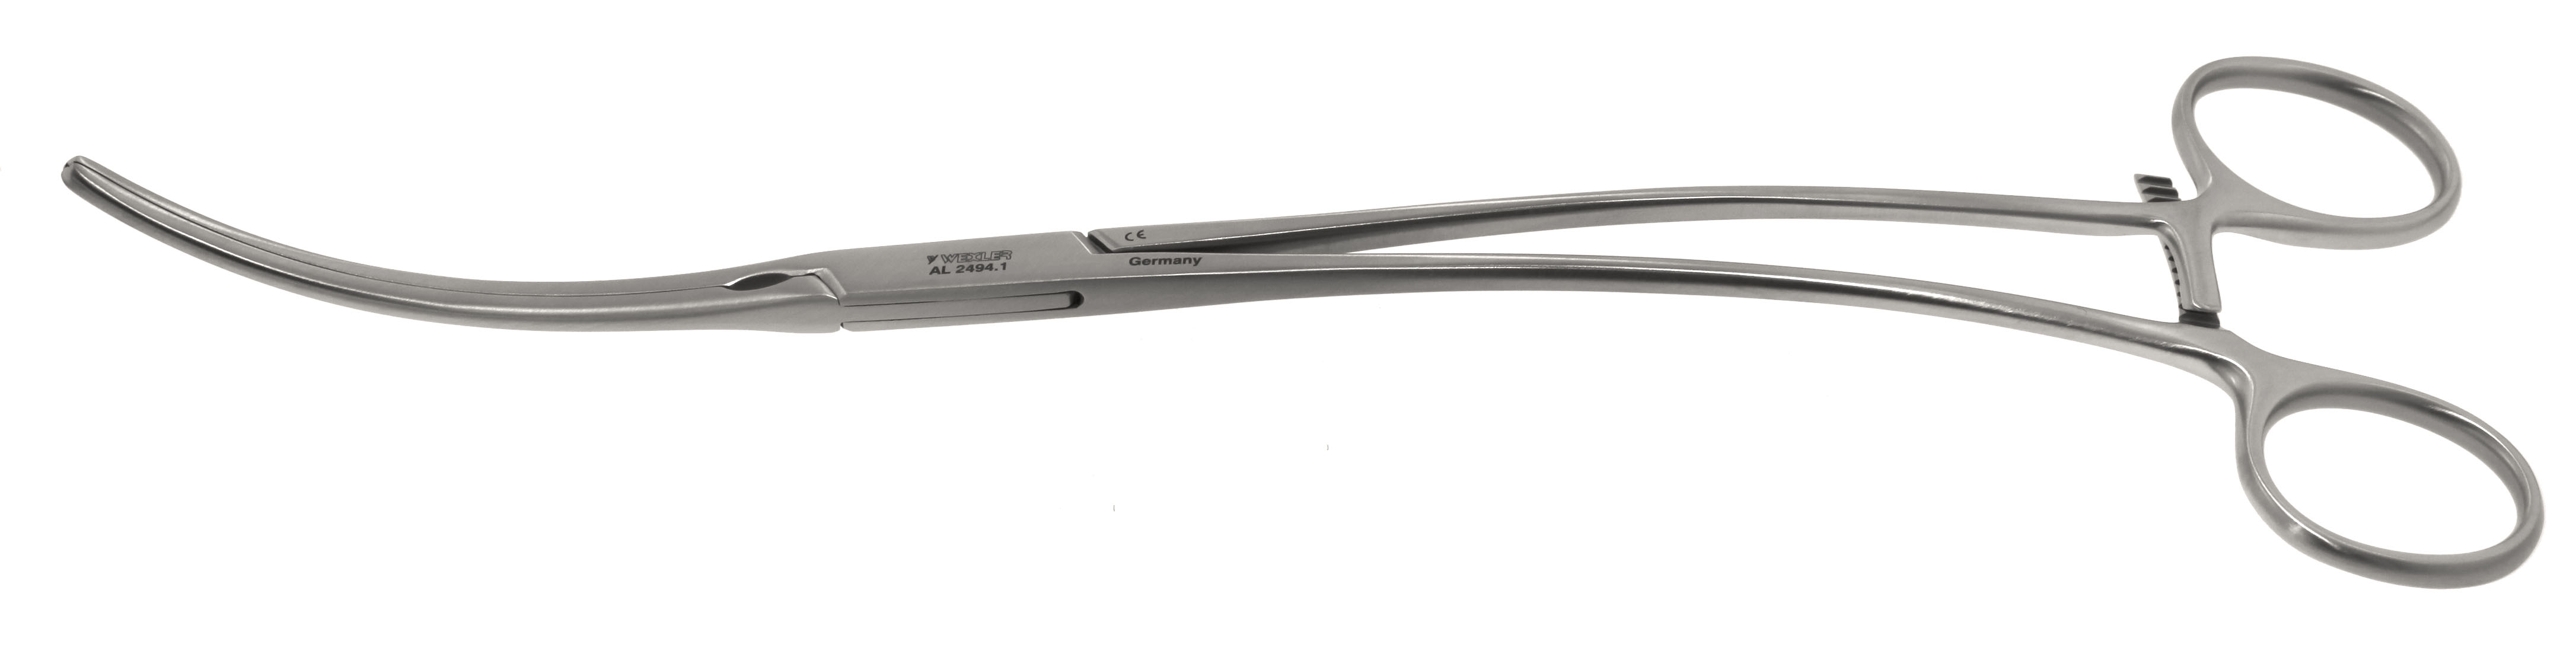 Wexler Aorta Aneurysm Clamp - Curved 75mm DeBakey Atraumatic jaws